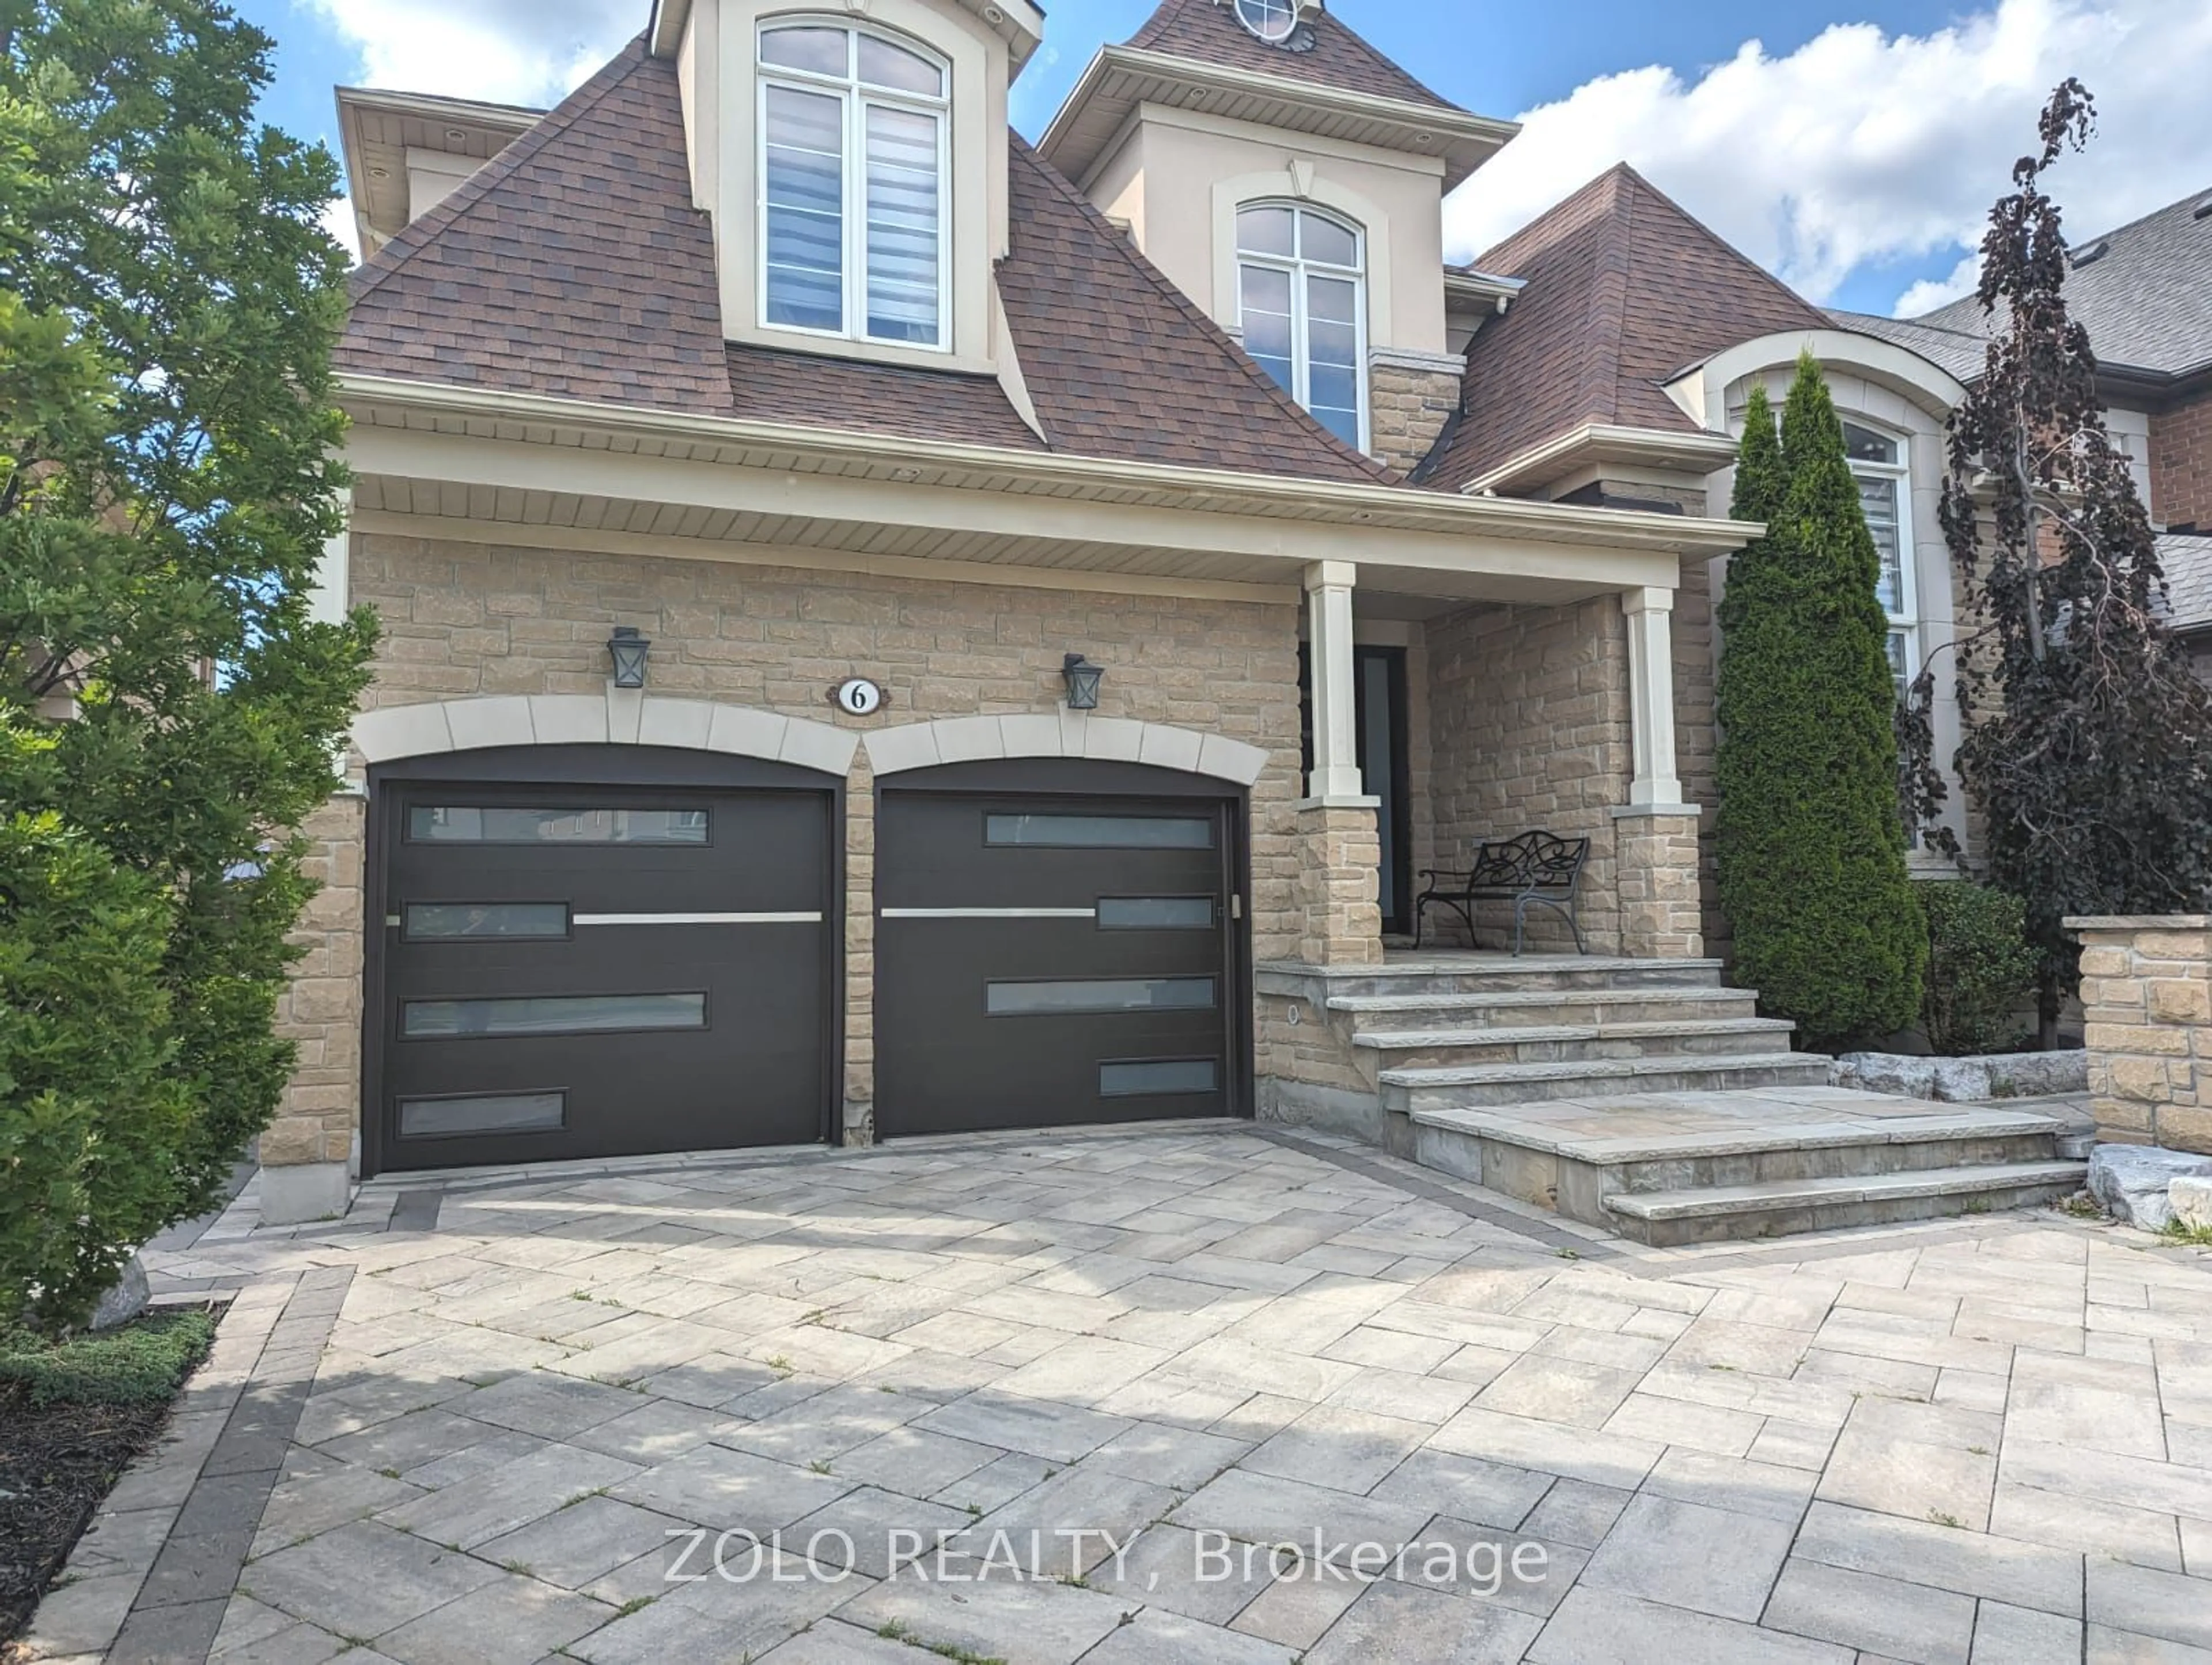 Home with brick exterior material for 6 Islington Dr, Brampton Ontario L6P 3A5